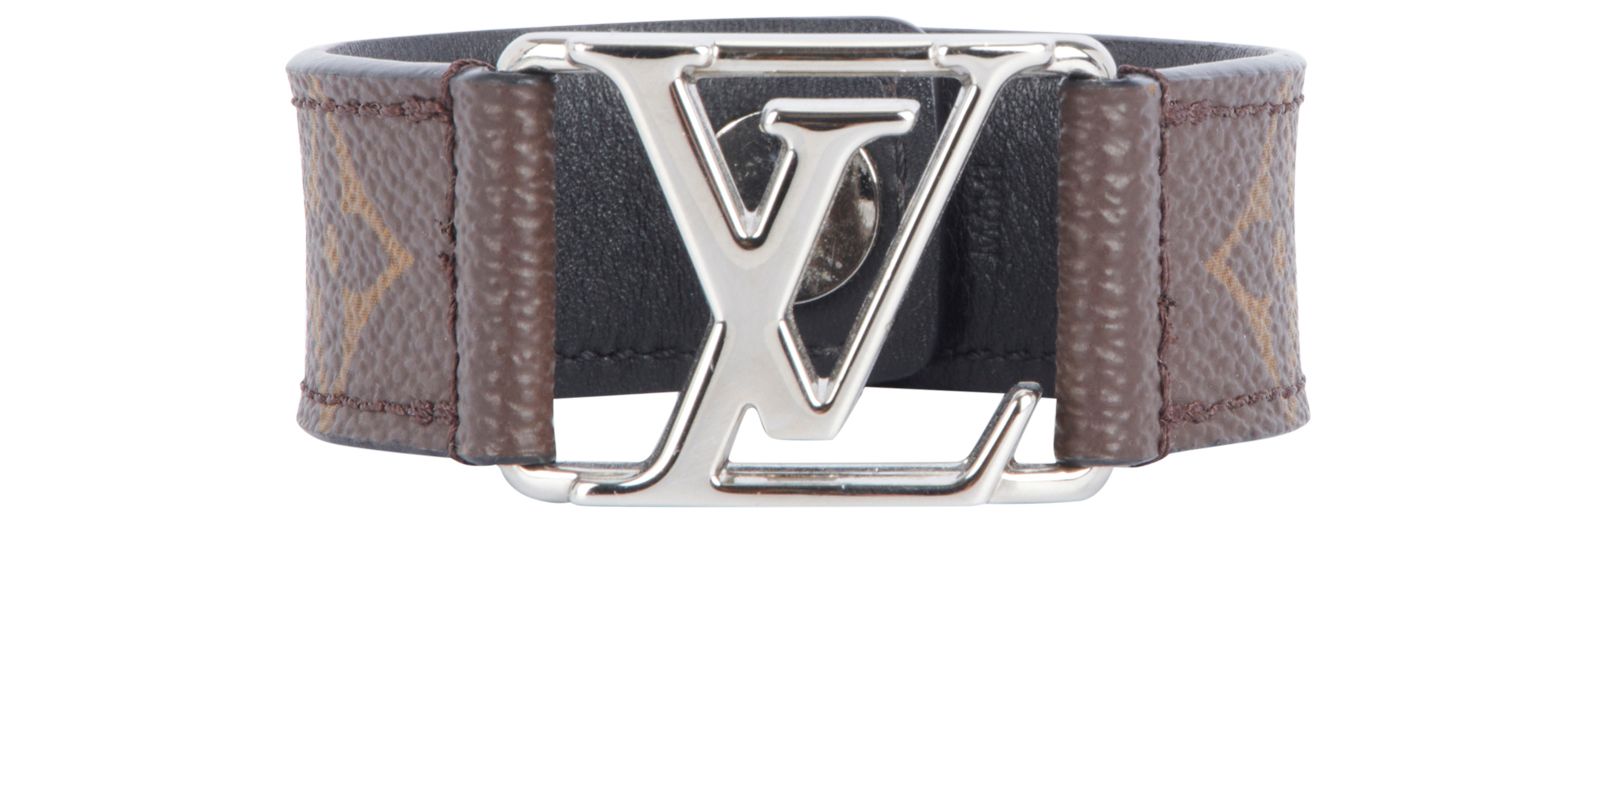 Louis Vuitton Hockenheim Bracelet